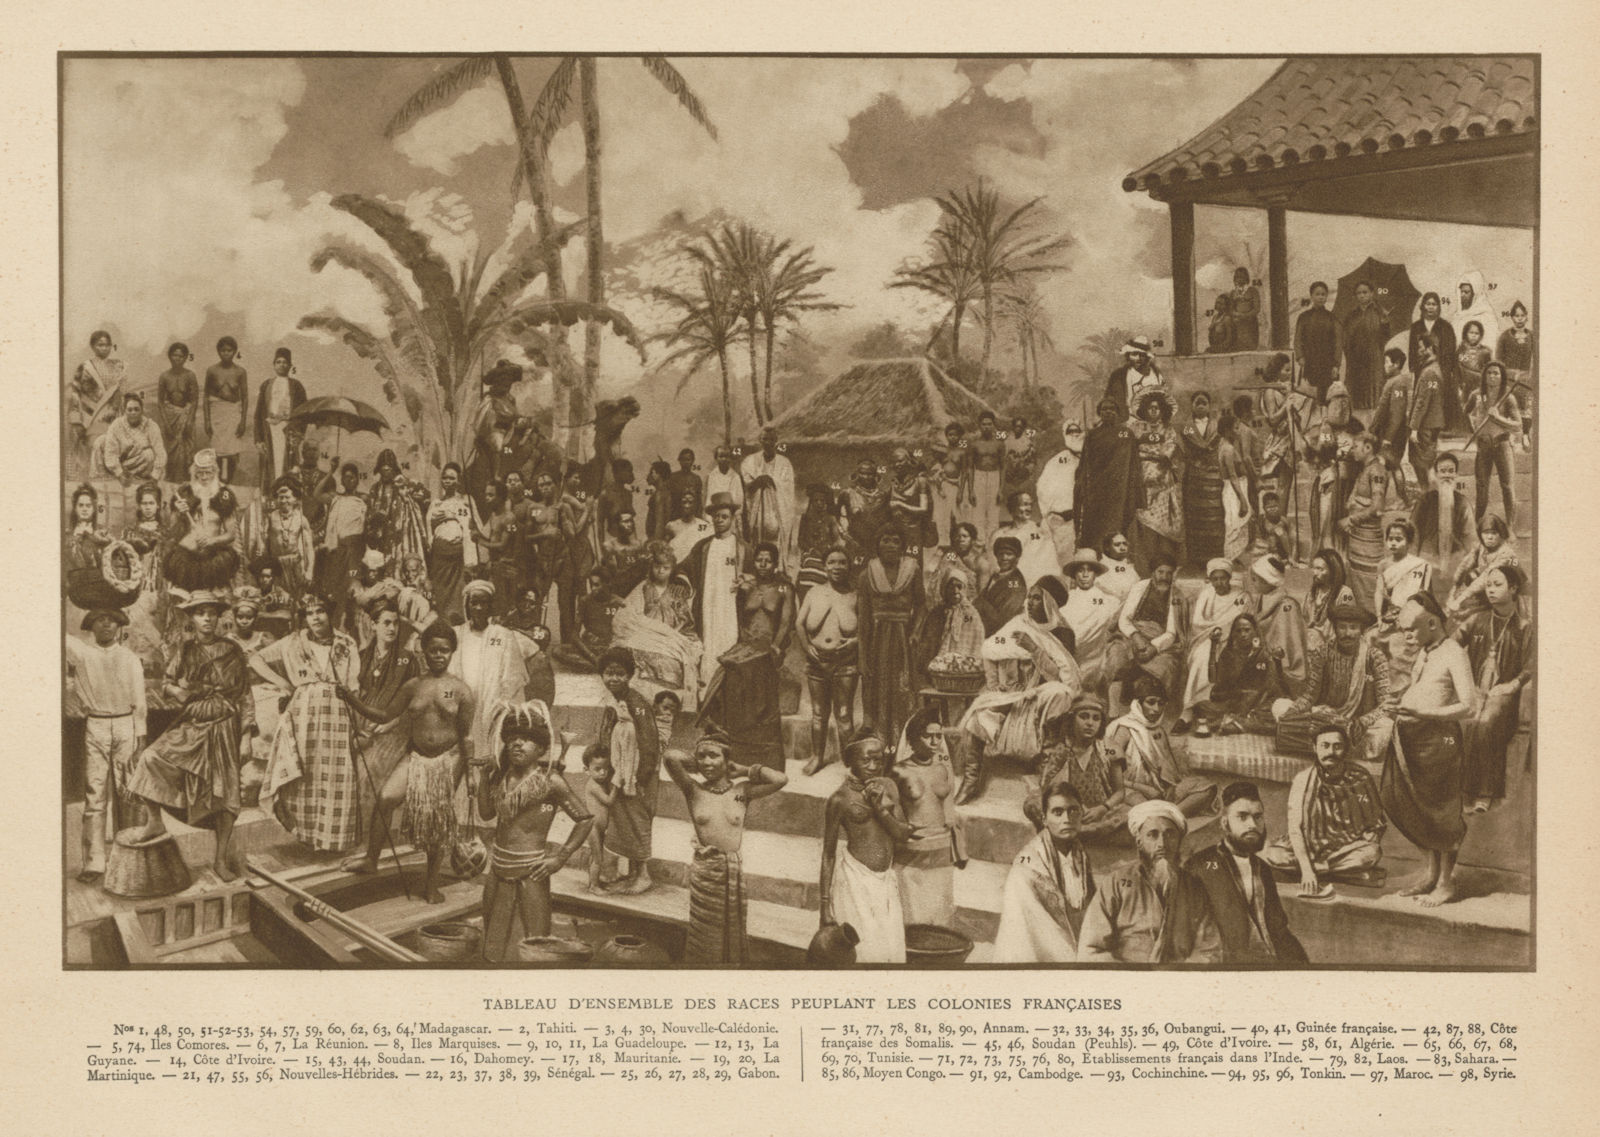 Associate Product Tableau des races des colonies Francaises. People of the French colonies 1929